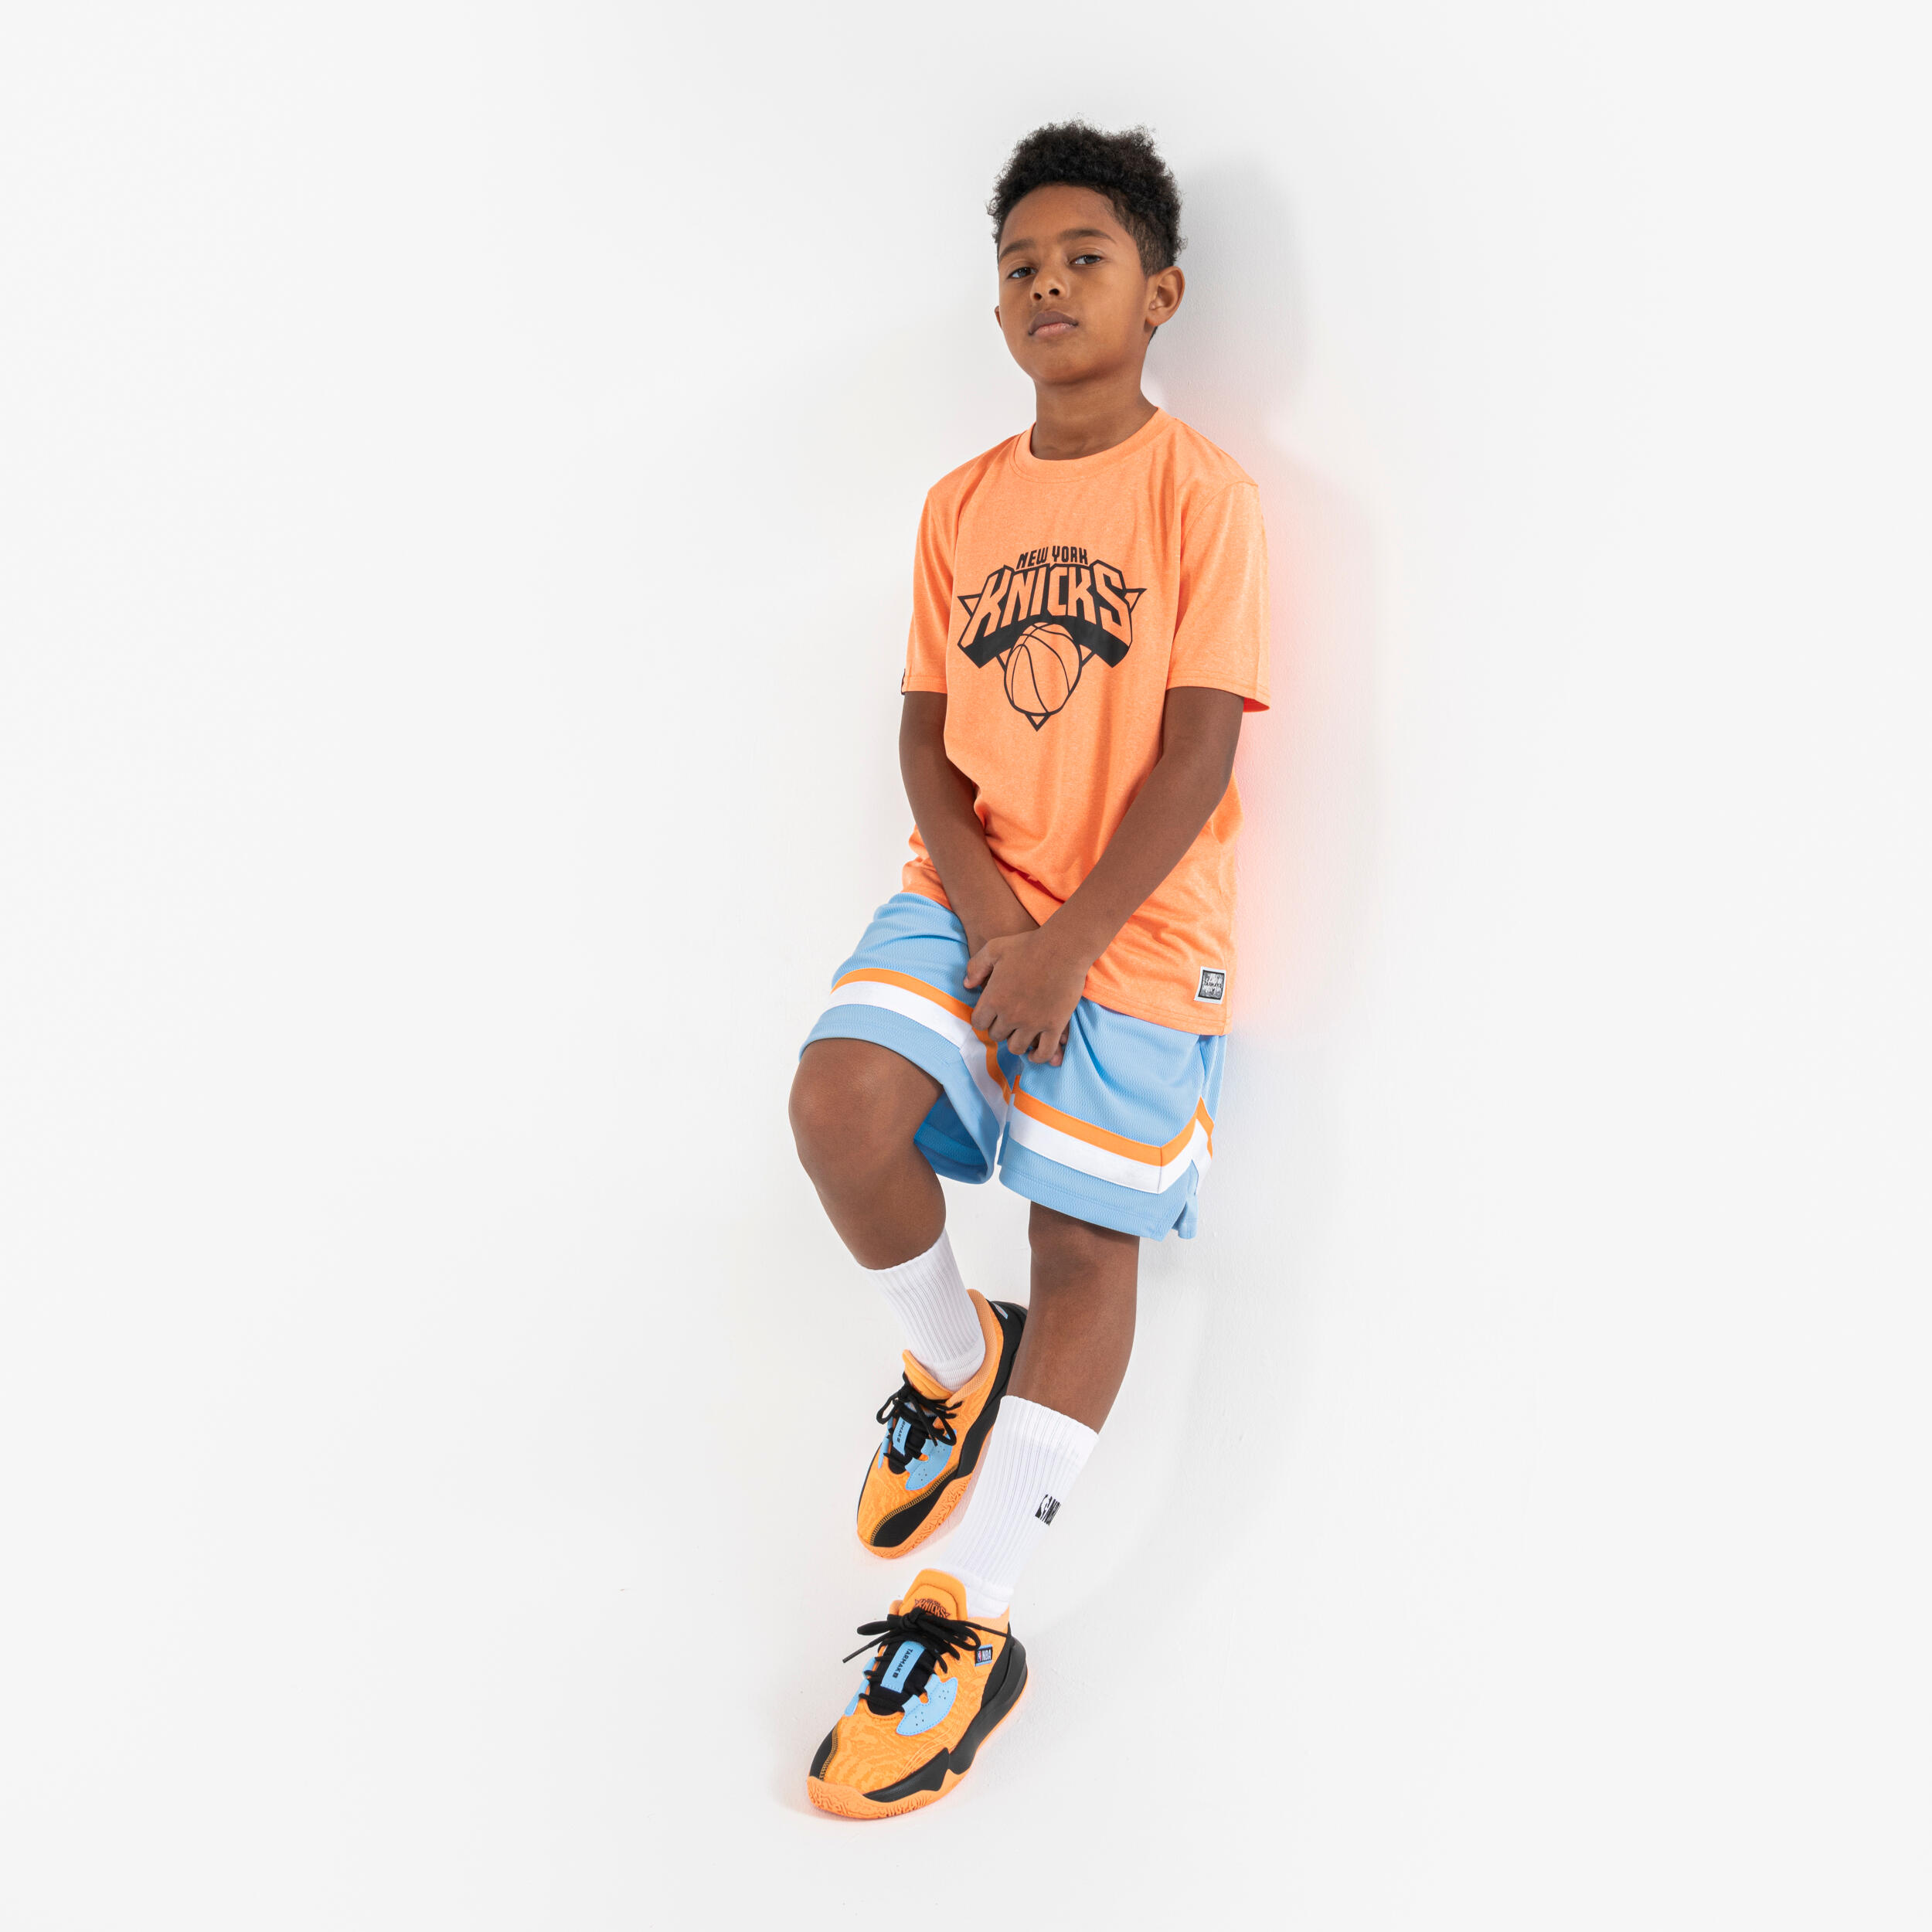 Kids' Basketball Shoes Fast 900 Low-1 - NBA Knicks/Orange 10/10